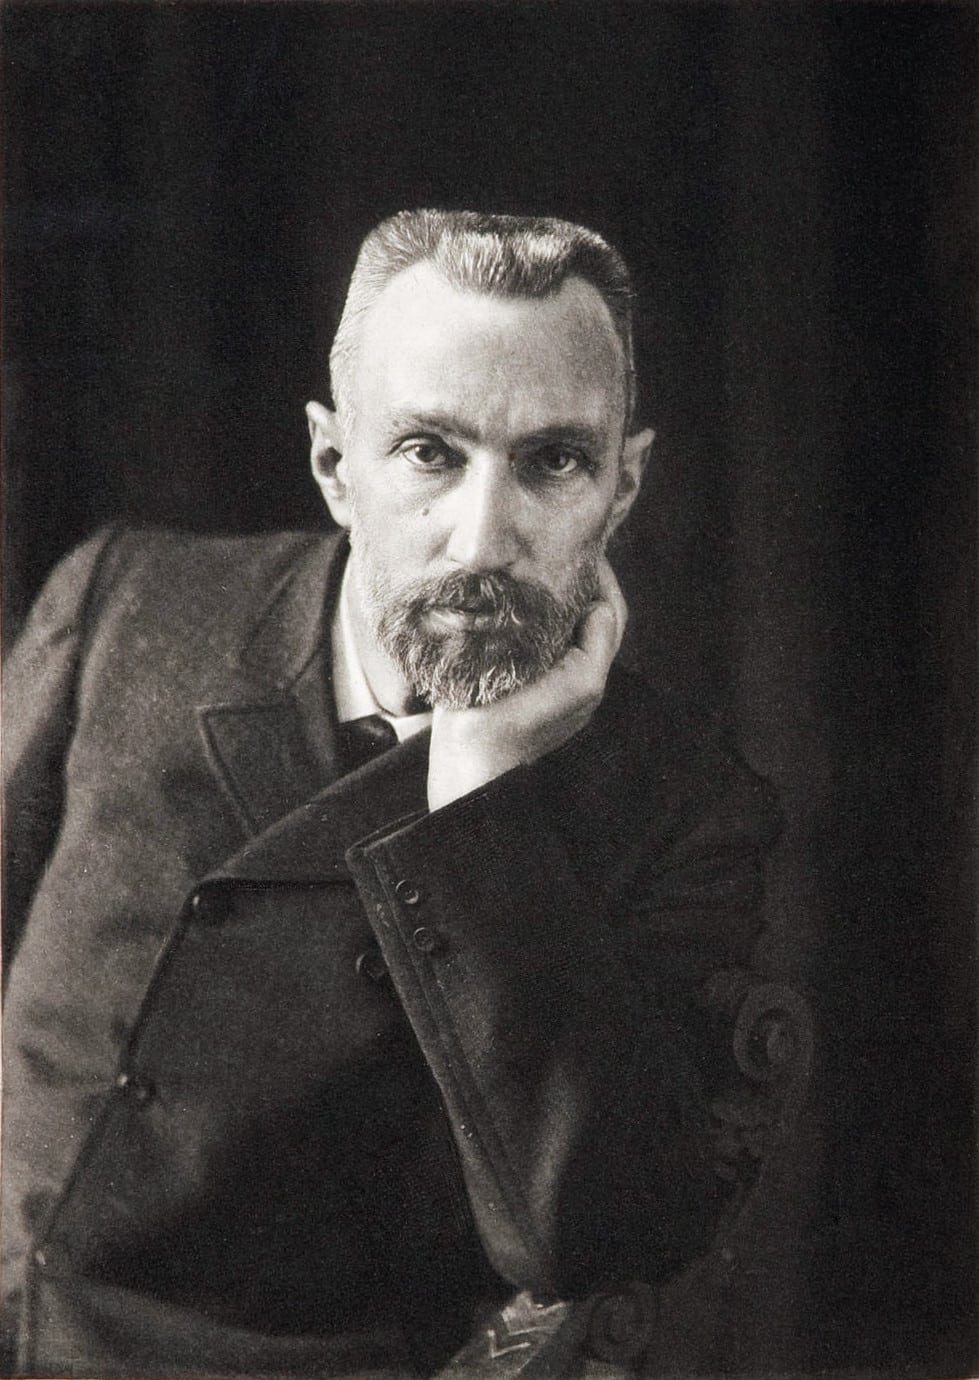 Pierre Curie
